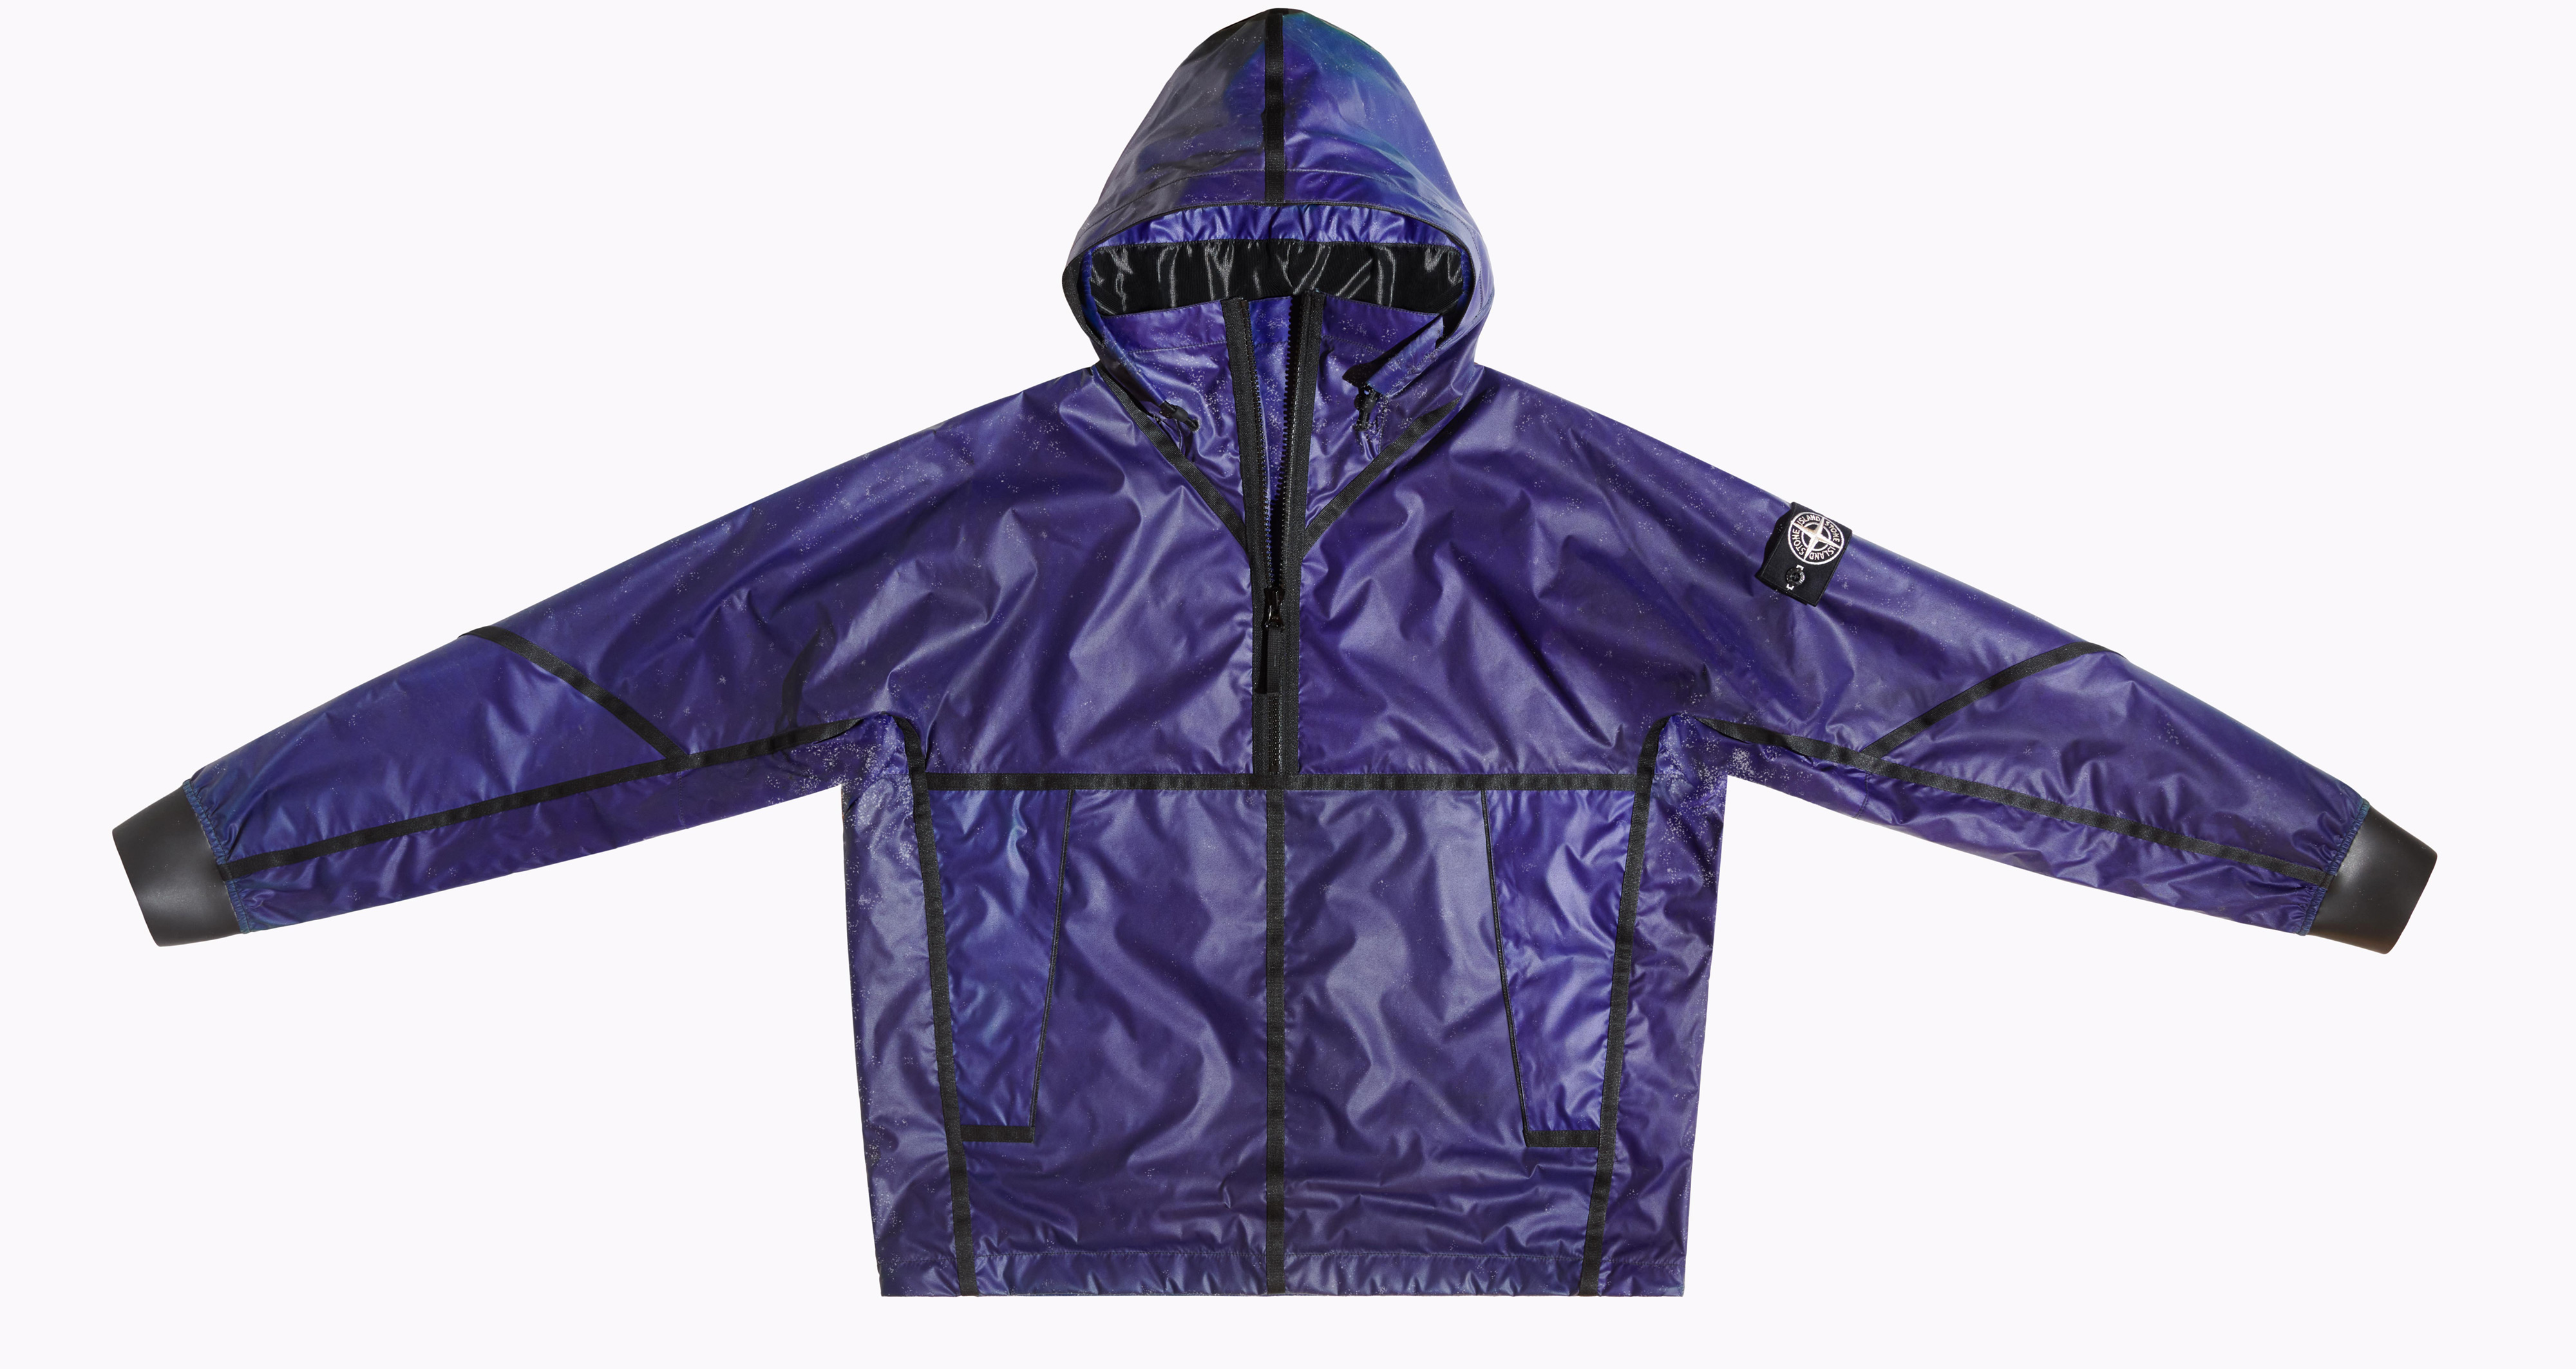 STONE ISLAND、温度で色が変化するジャケット発売